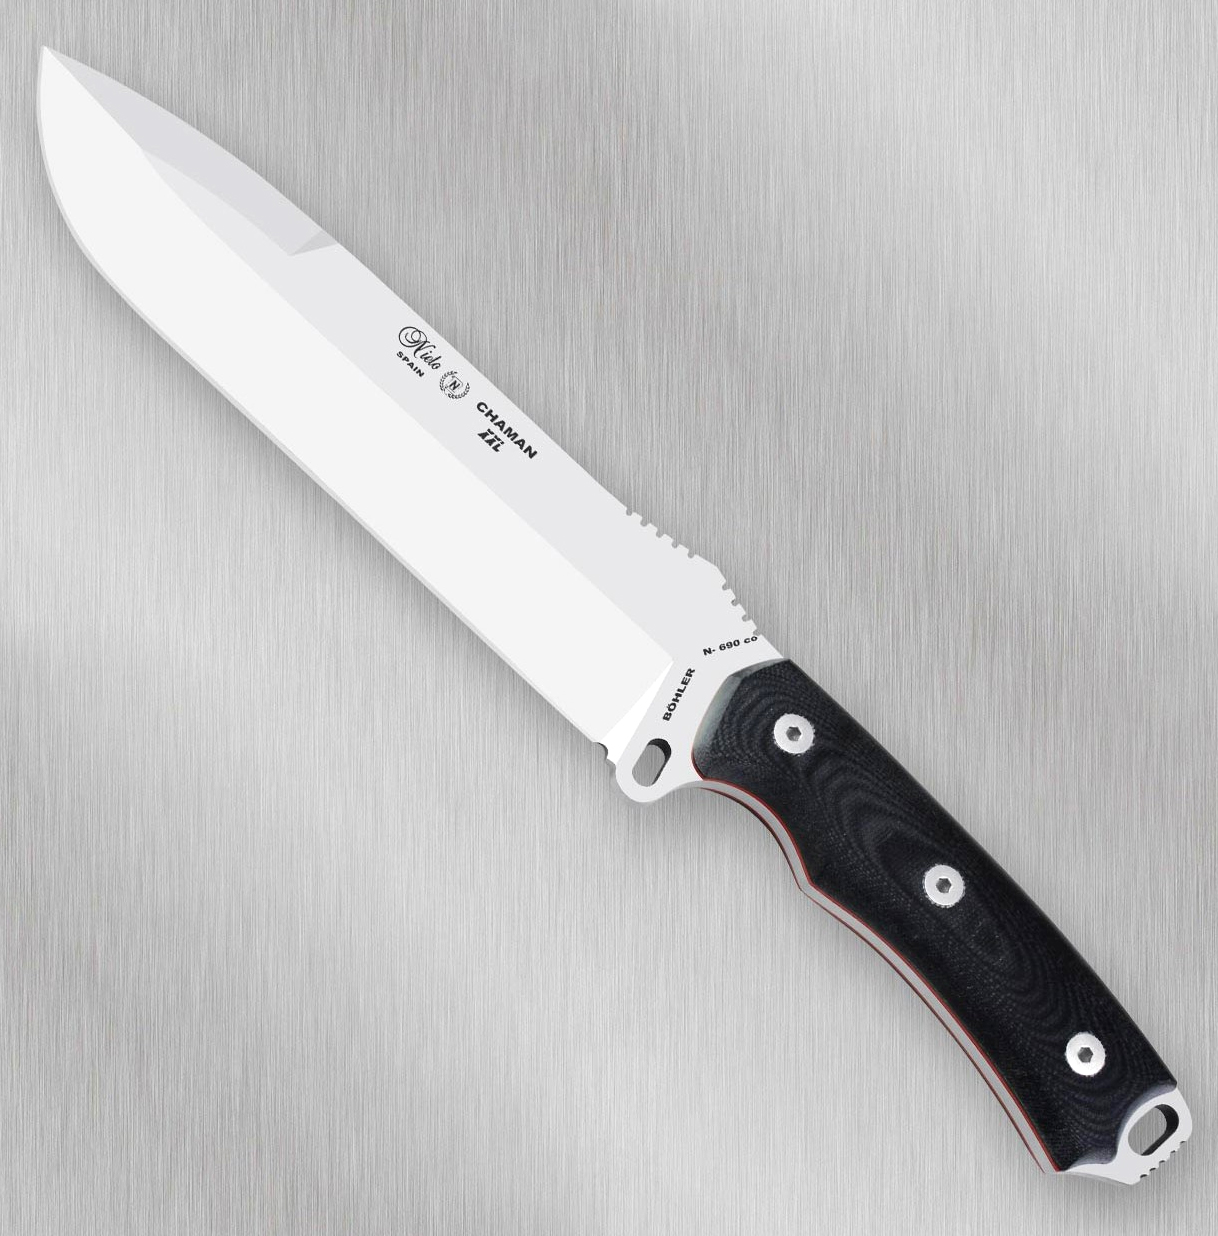 Купить нож алматы. Складной нож Nieto. Нож Nieto 440c. Нож Мигель Нието. Нож складной Nieto work.